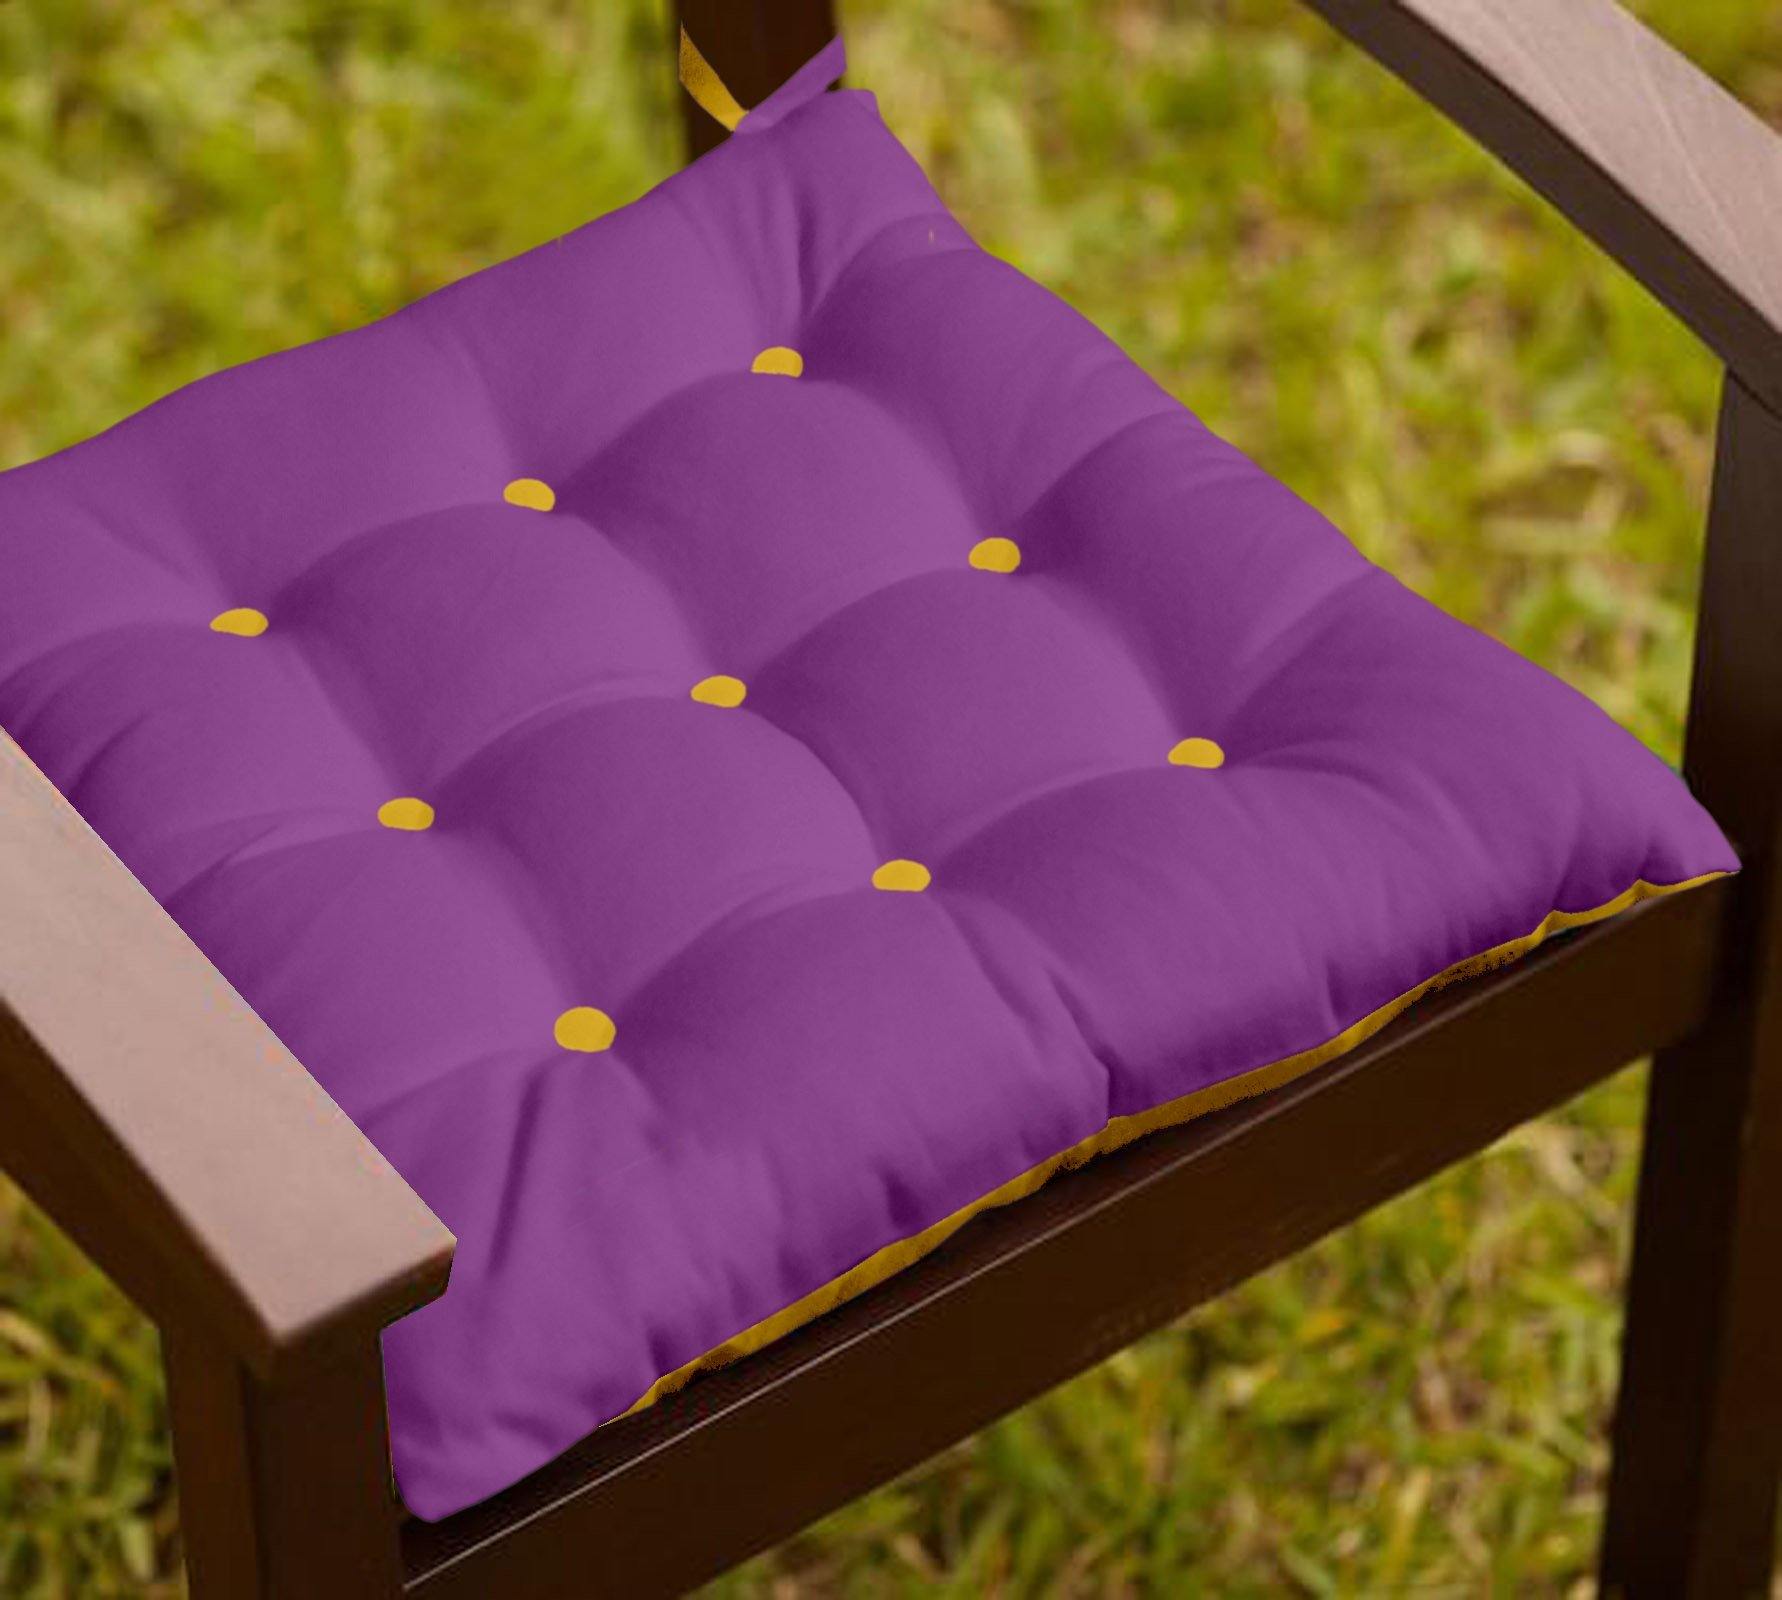 Lushomes Half Panama Bi-Color Royal Lilac and Lemon Chrome Chair Cushion with 9+9 Buttons and 4 Strings - Lushomes